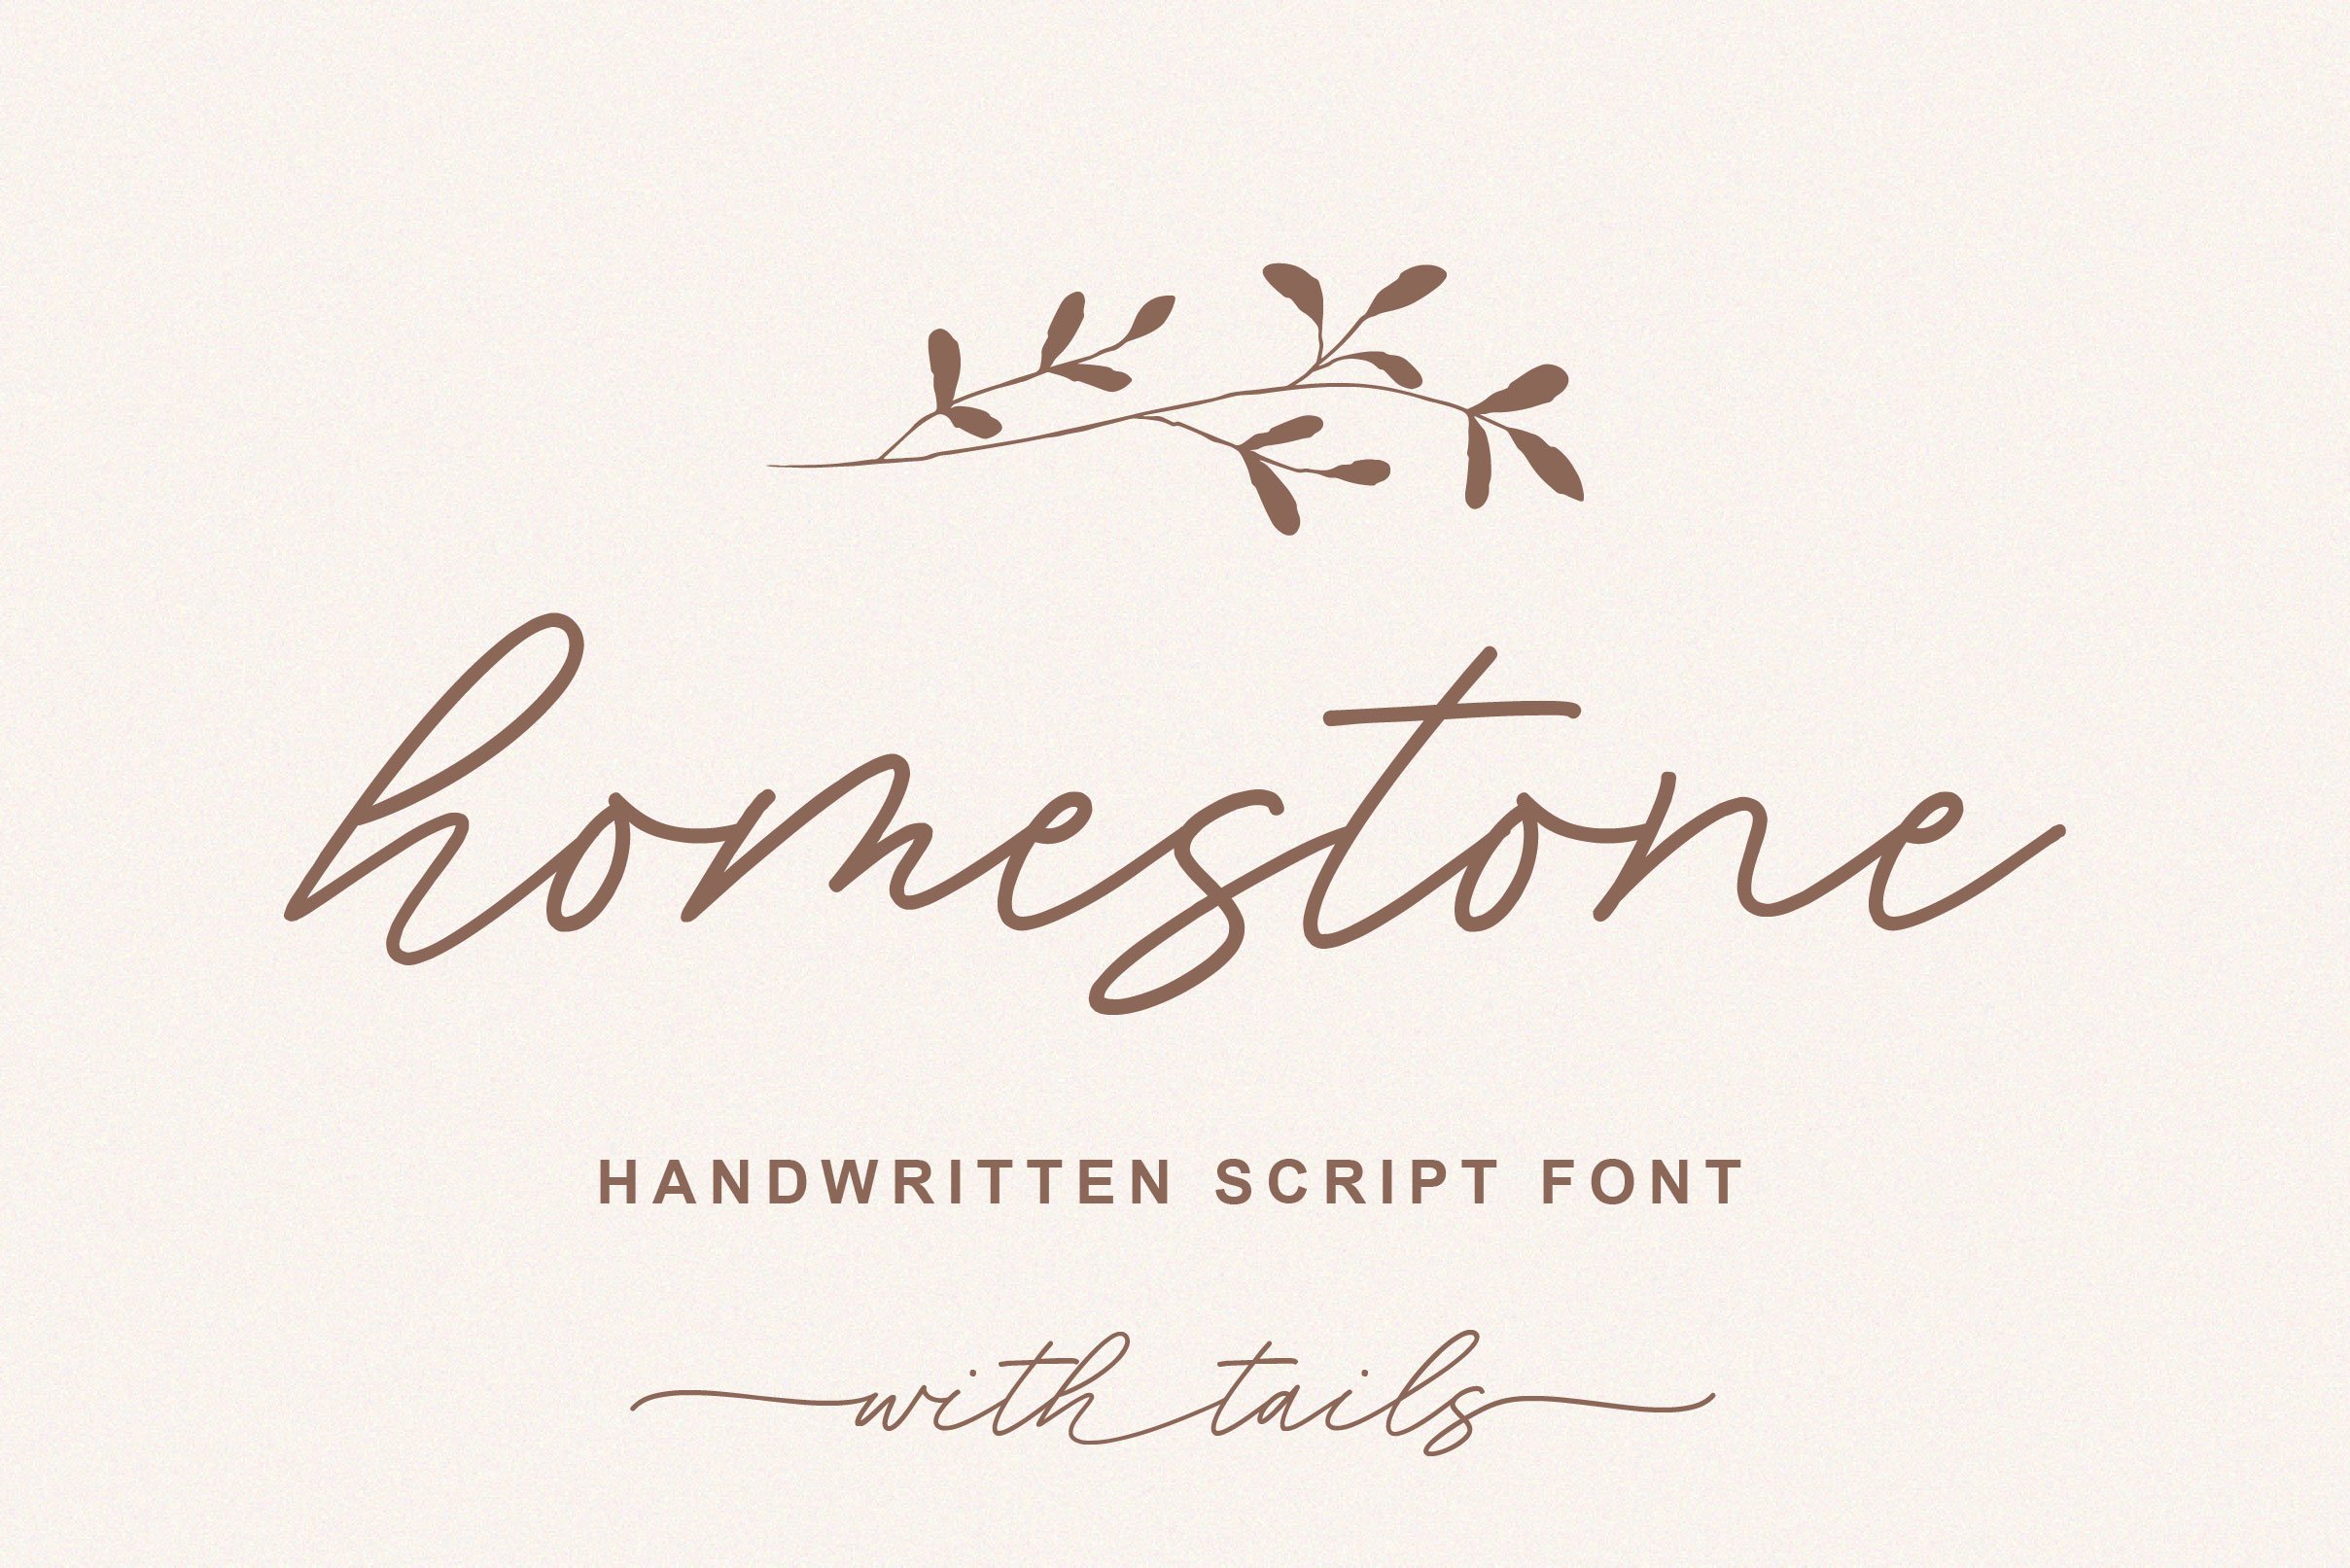 Homestone Handwritten Script Font cover image.